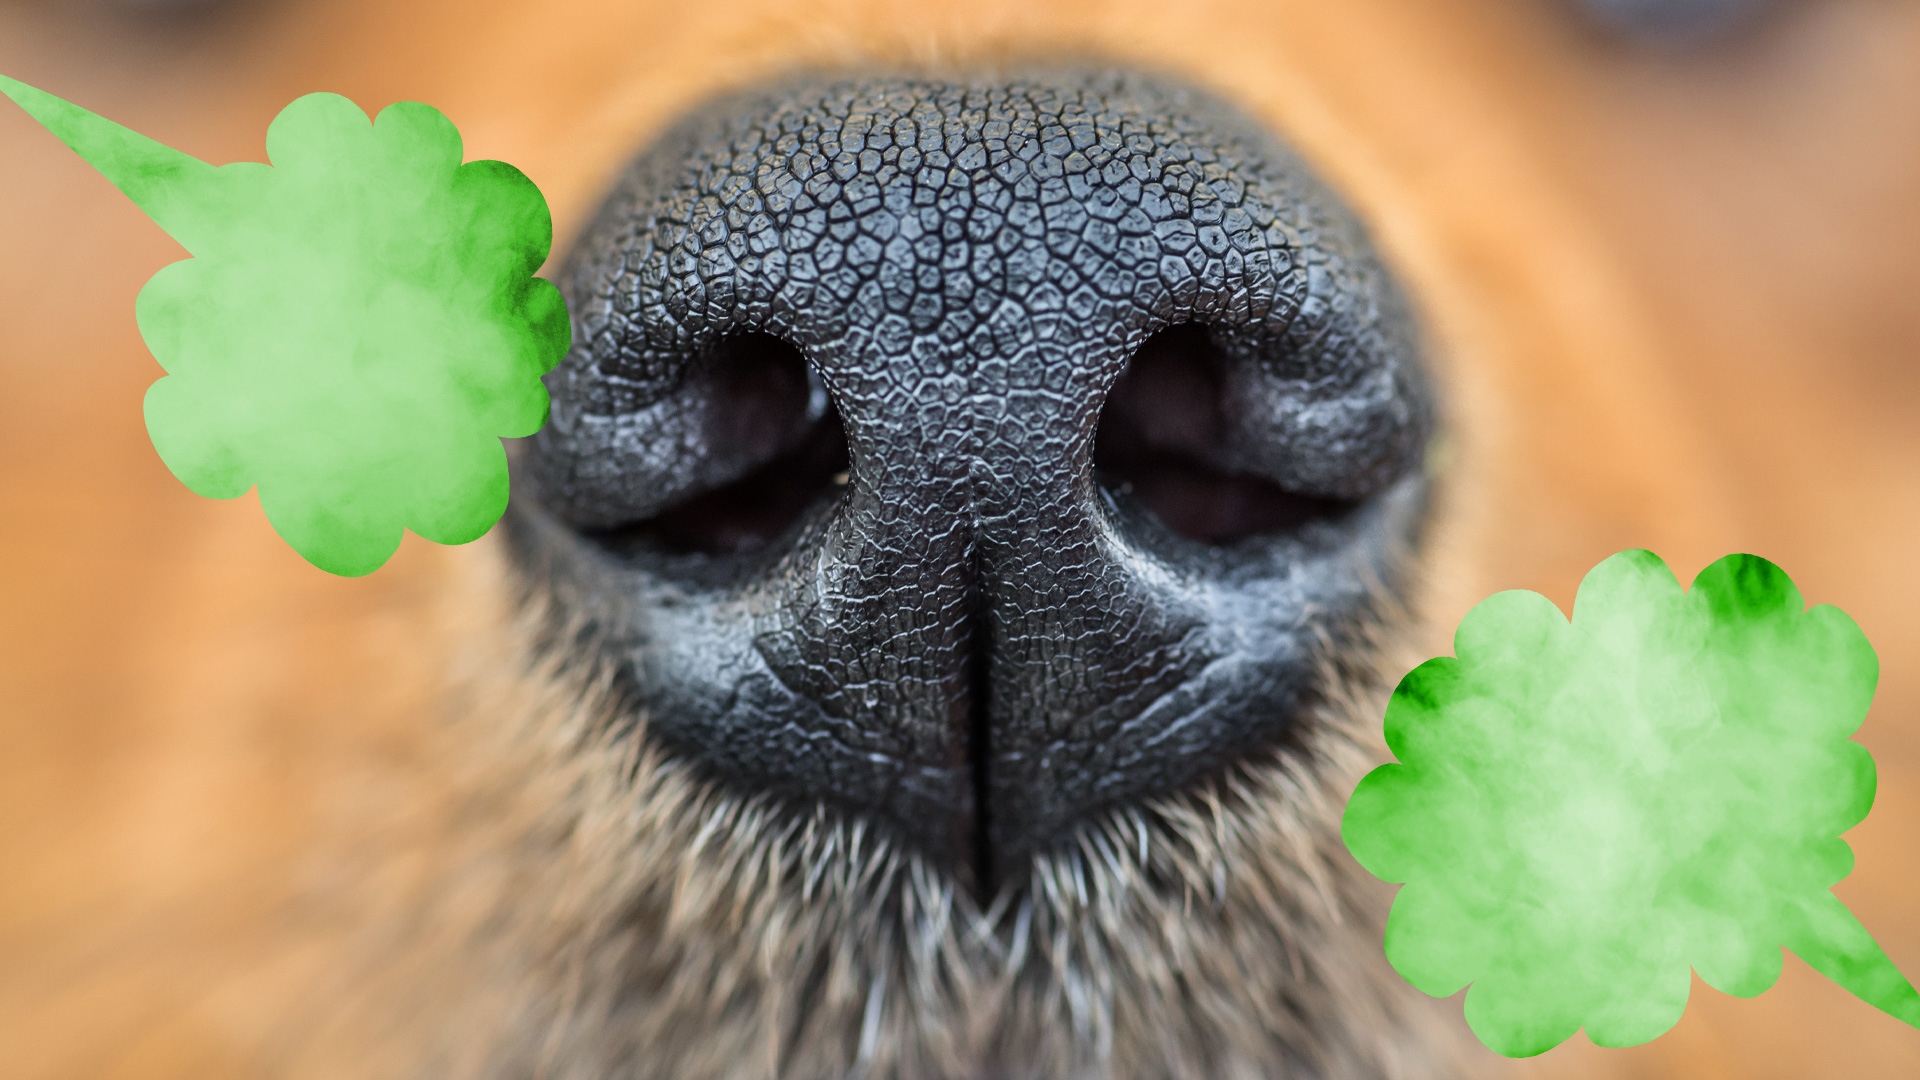 A close up of a dog's nose